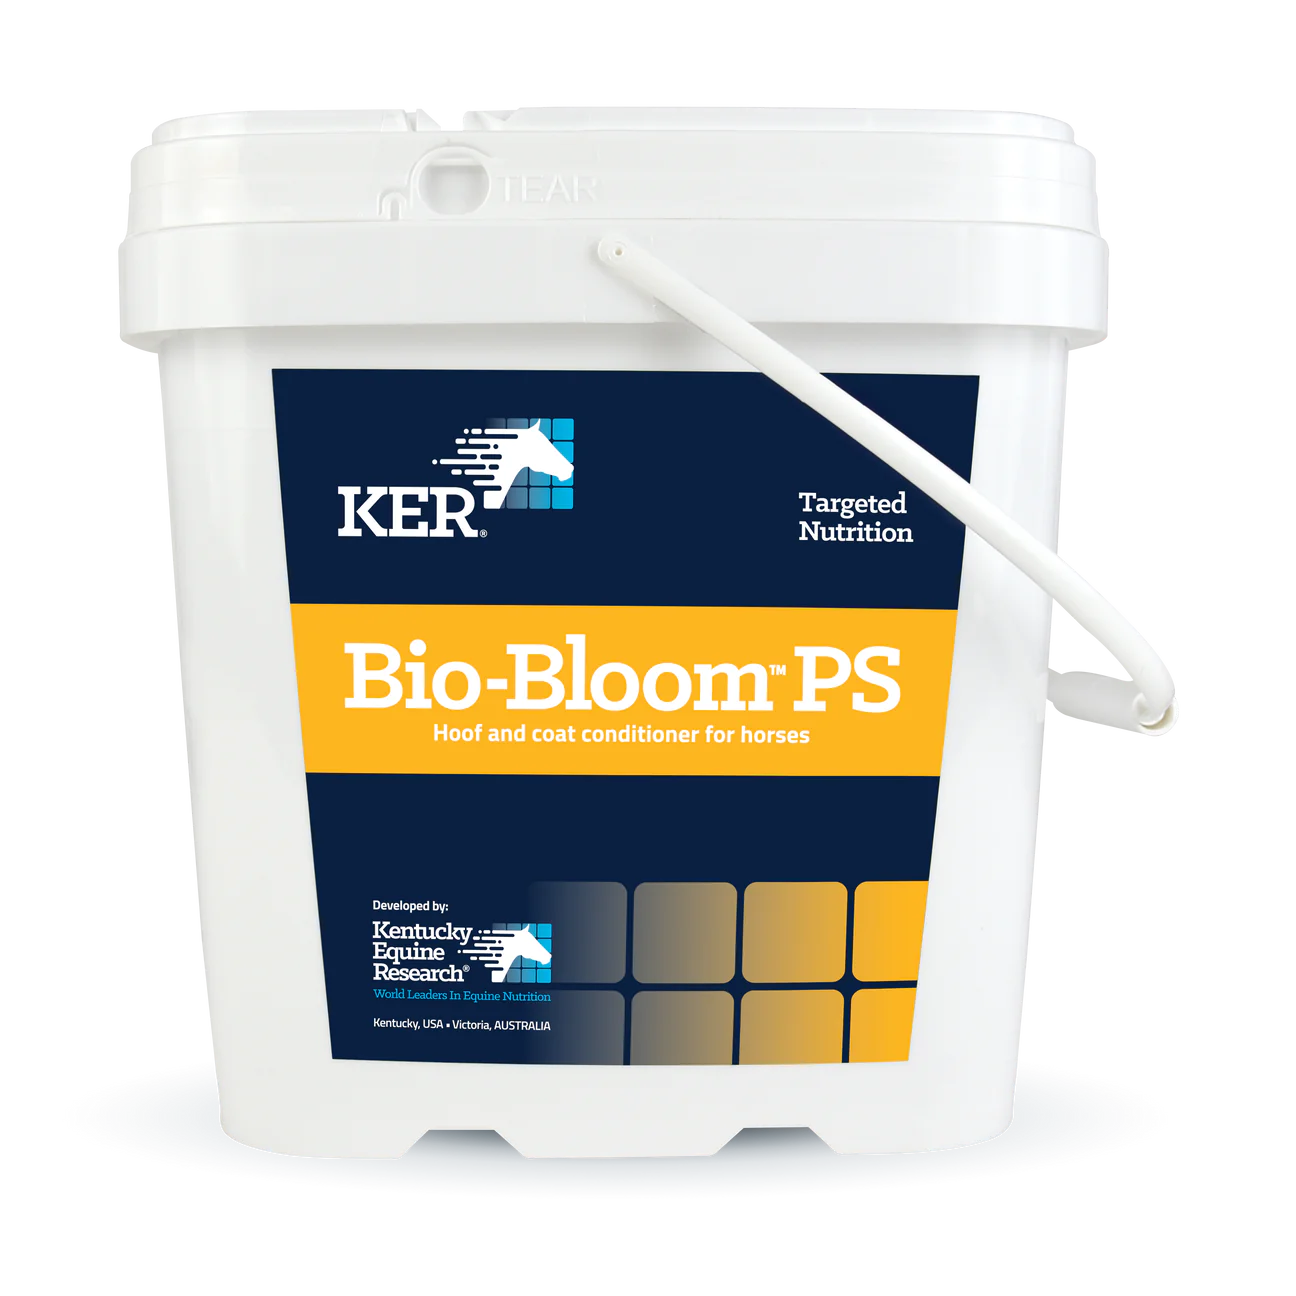 Bio-Bloom PS